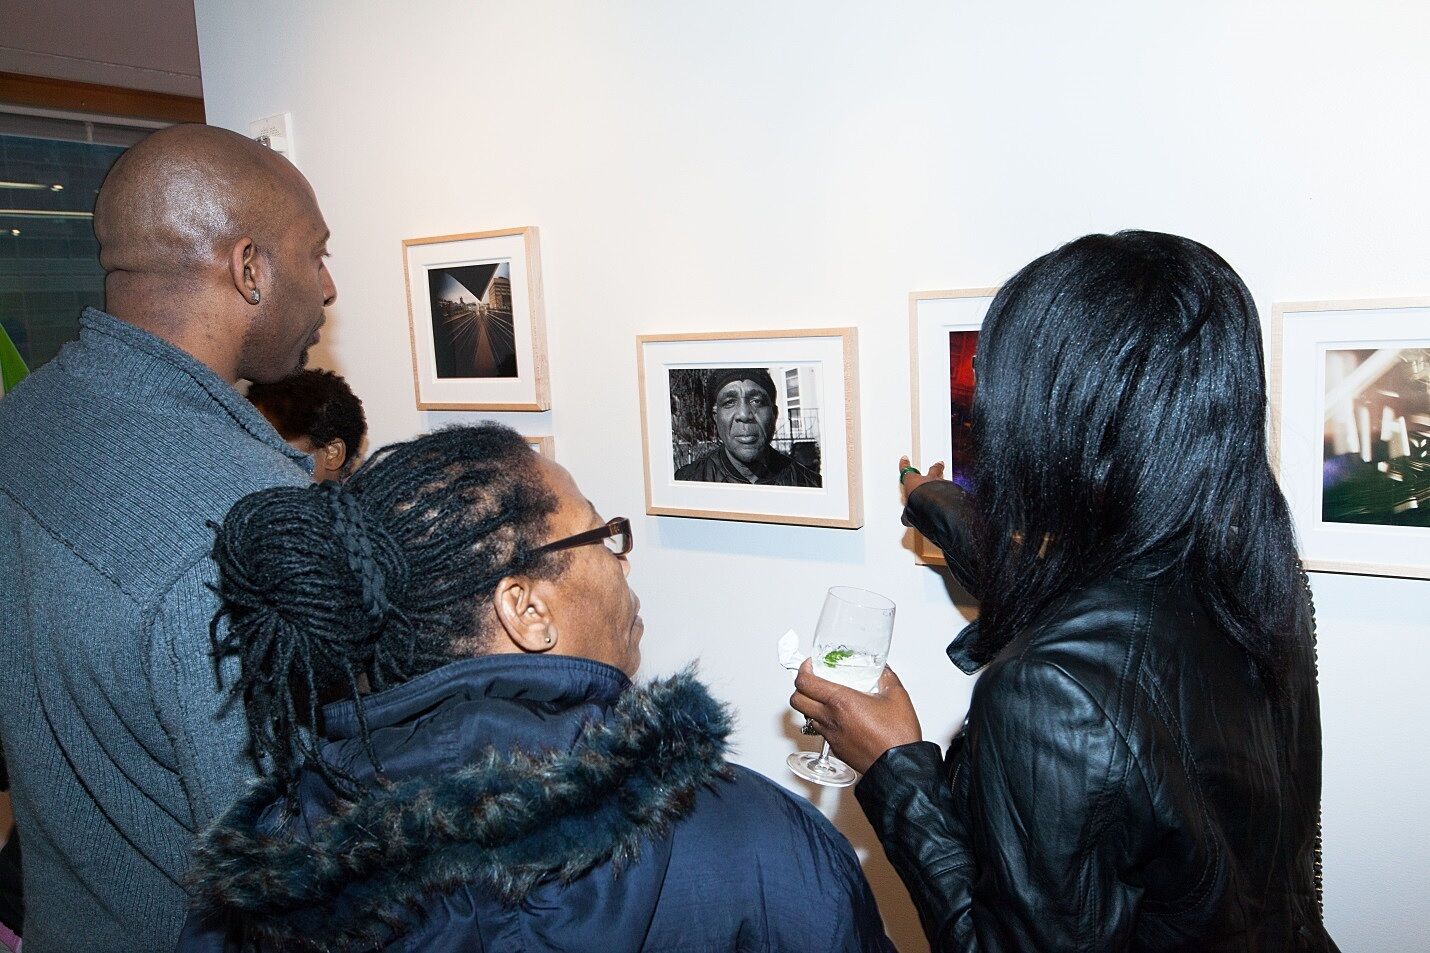 Guests discuss artwork.